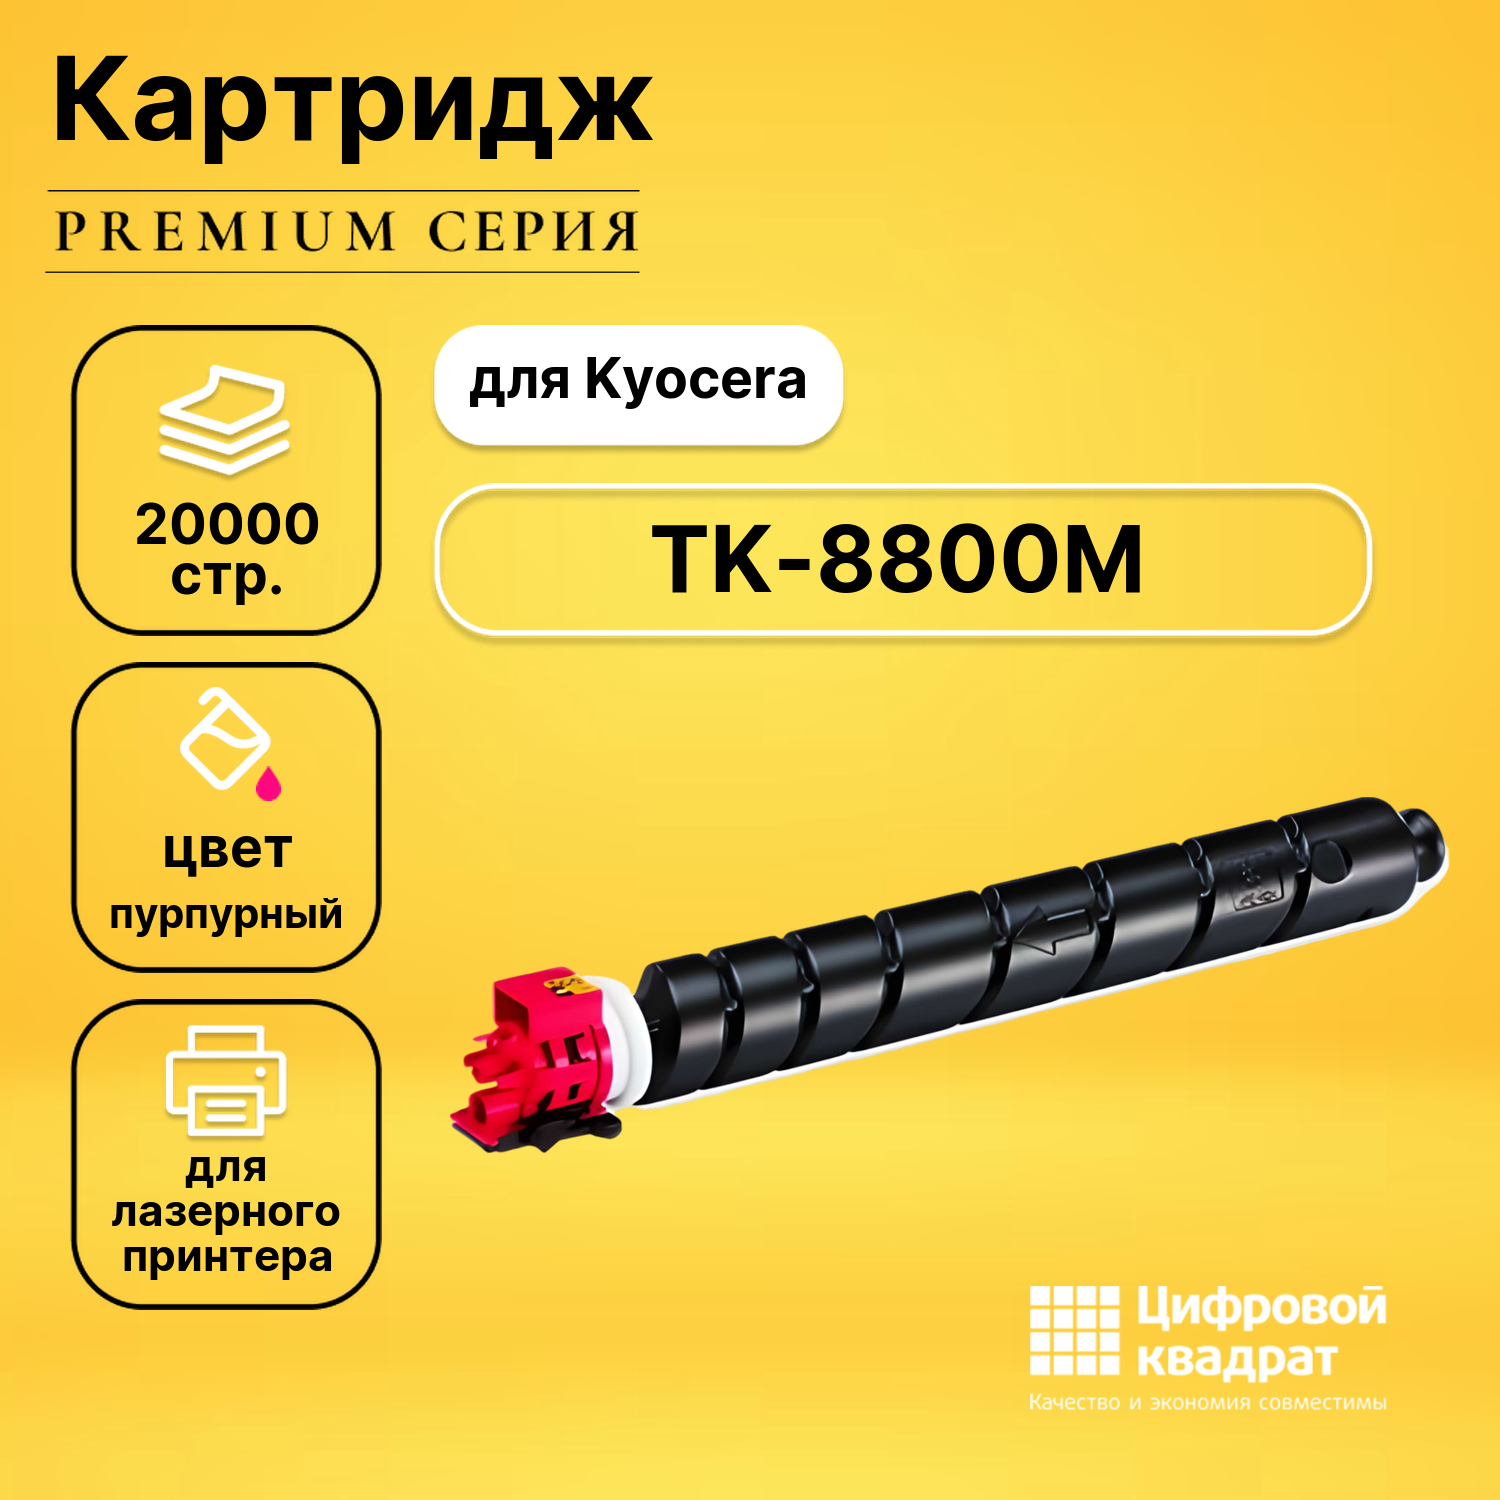 Картридж DS TK-8800M Kyocera пурпурный совместимый